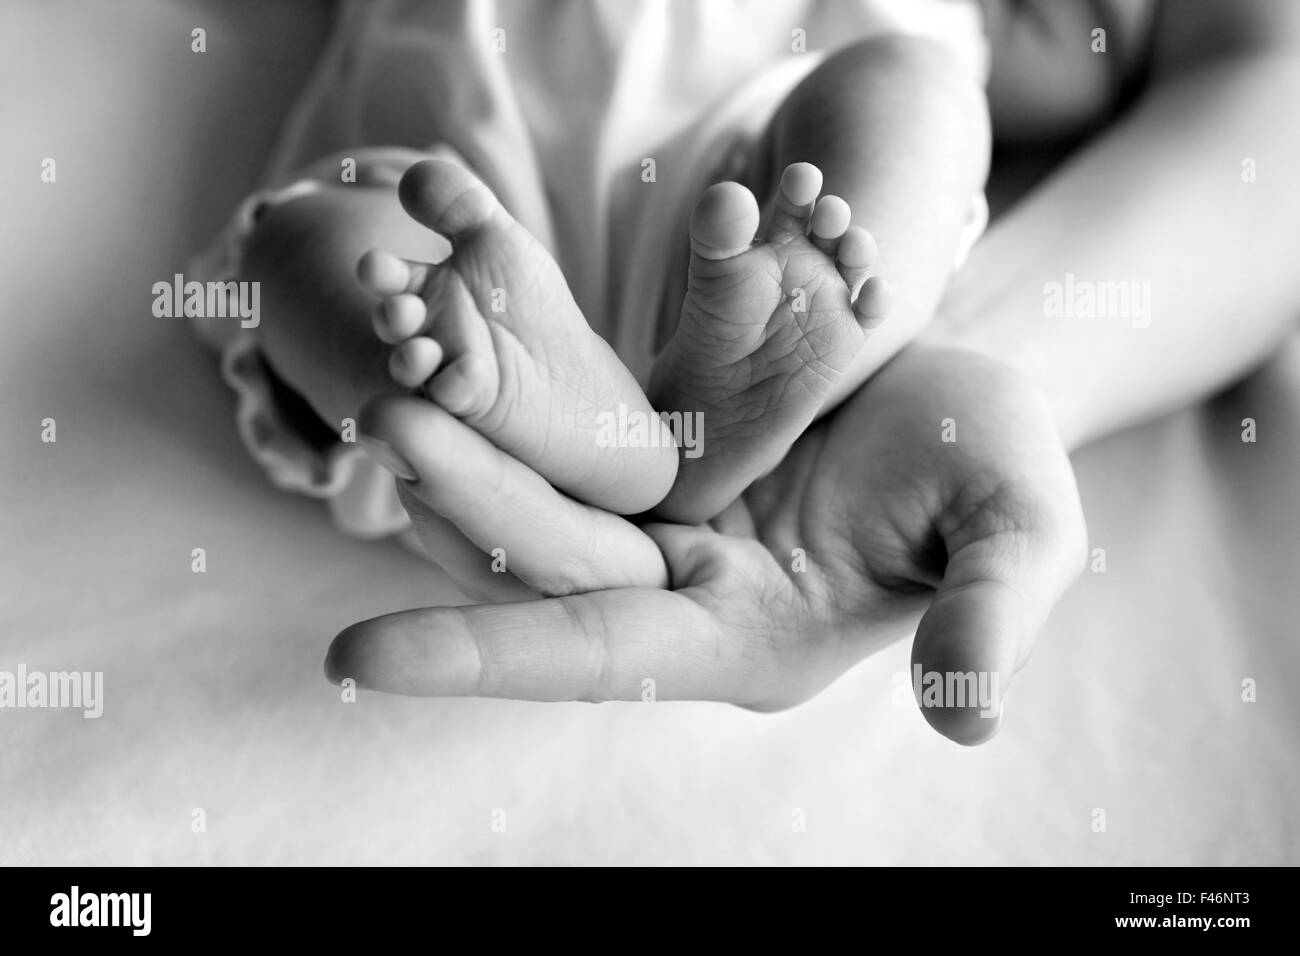 Целовал ноги маме. Мама целует ножки малышу. Целование ног детей. Поцелуй ножки малыша. Ребенок целует ноги маме.